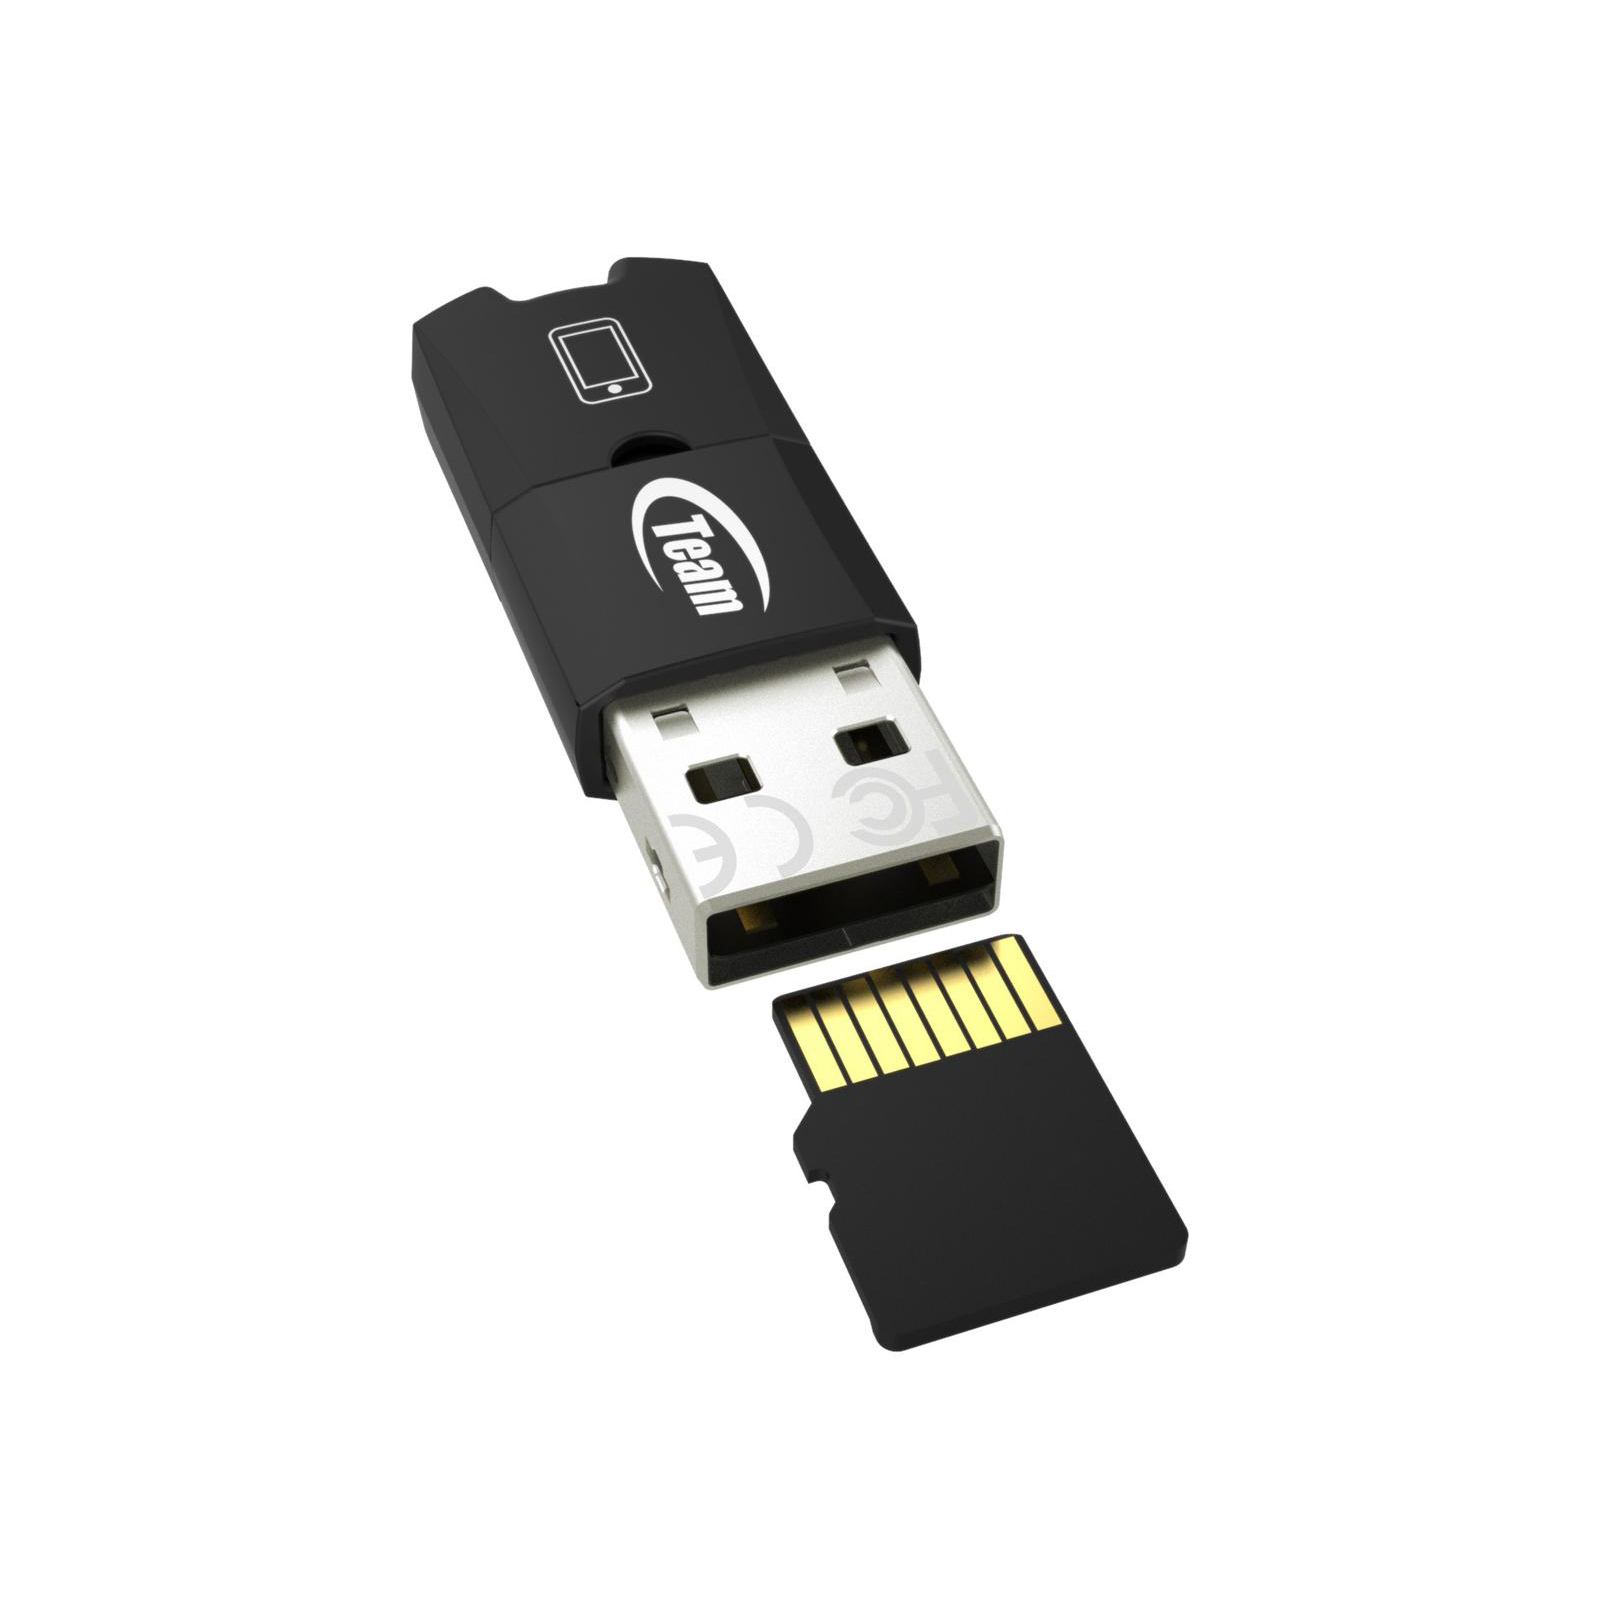 USB флеш накопитель Team 32GB M141 Black USB 2.0 (TUSDH32GCL1036) изображение 5